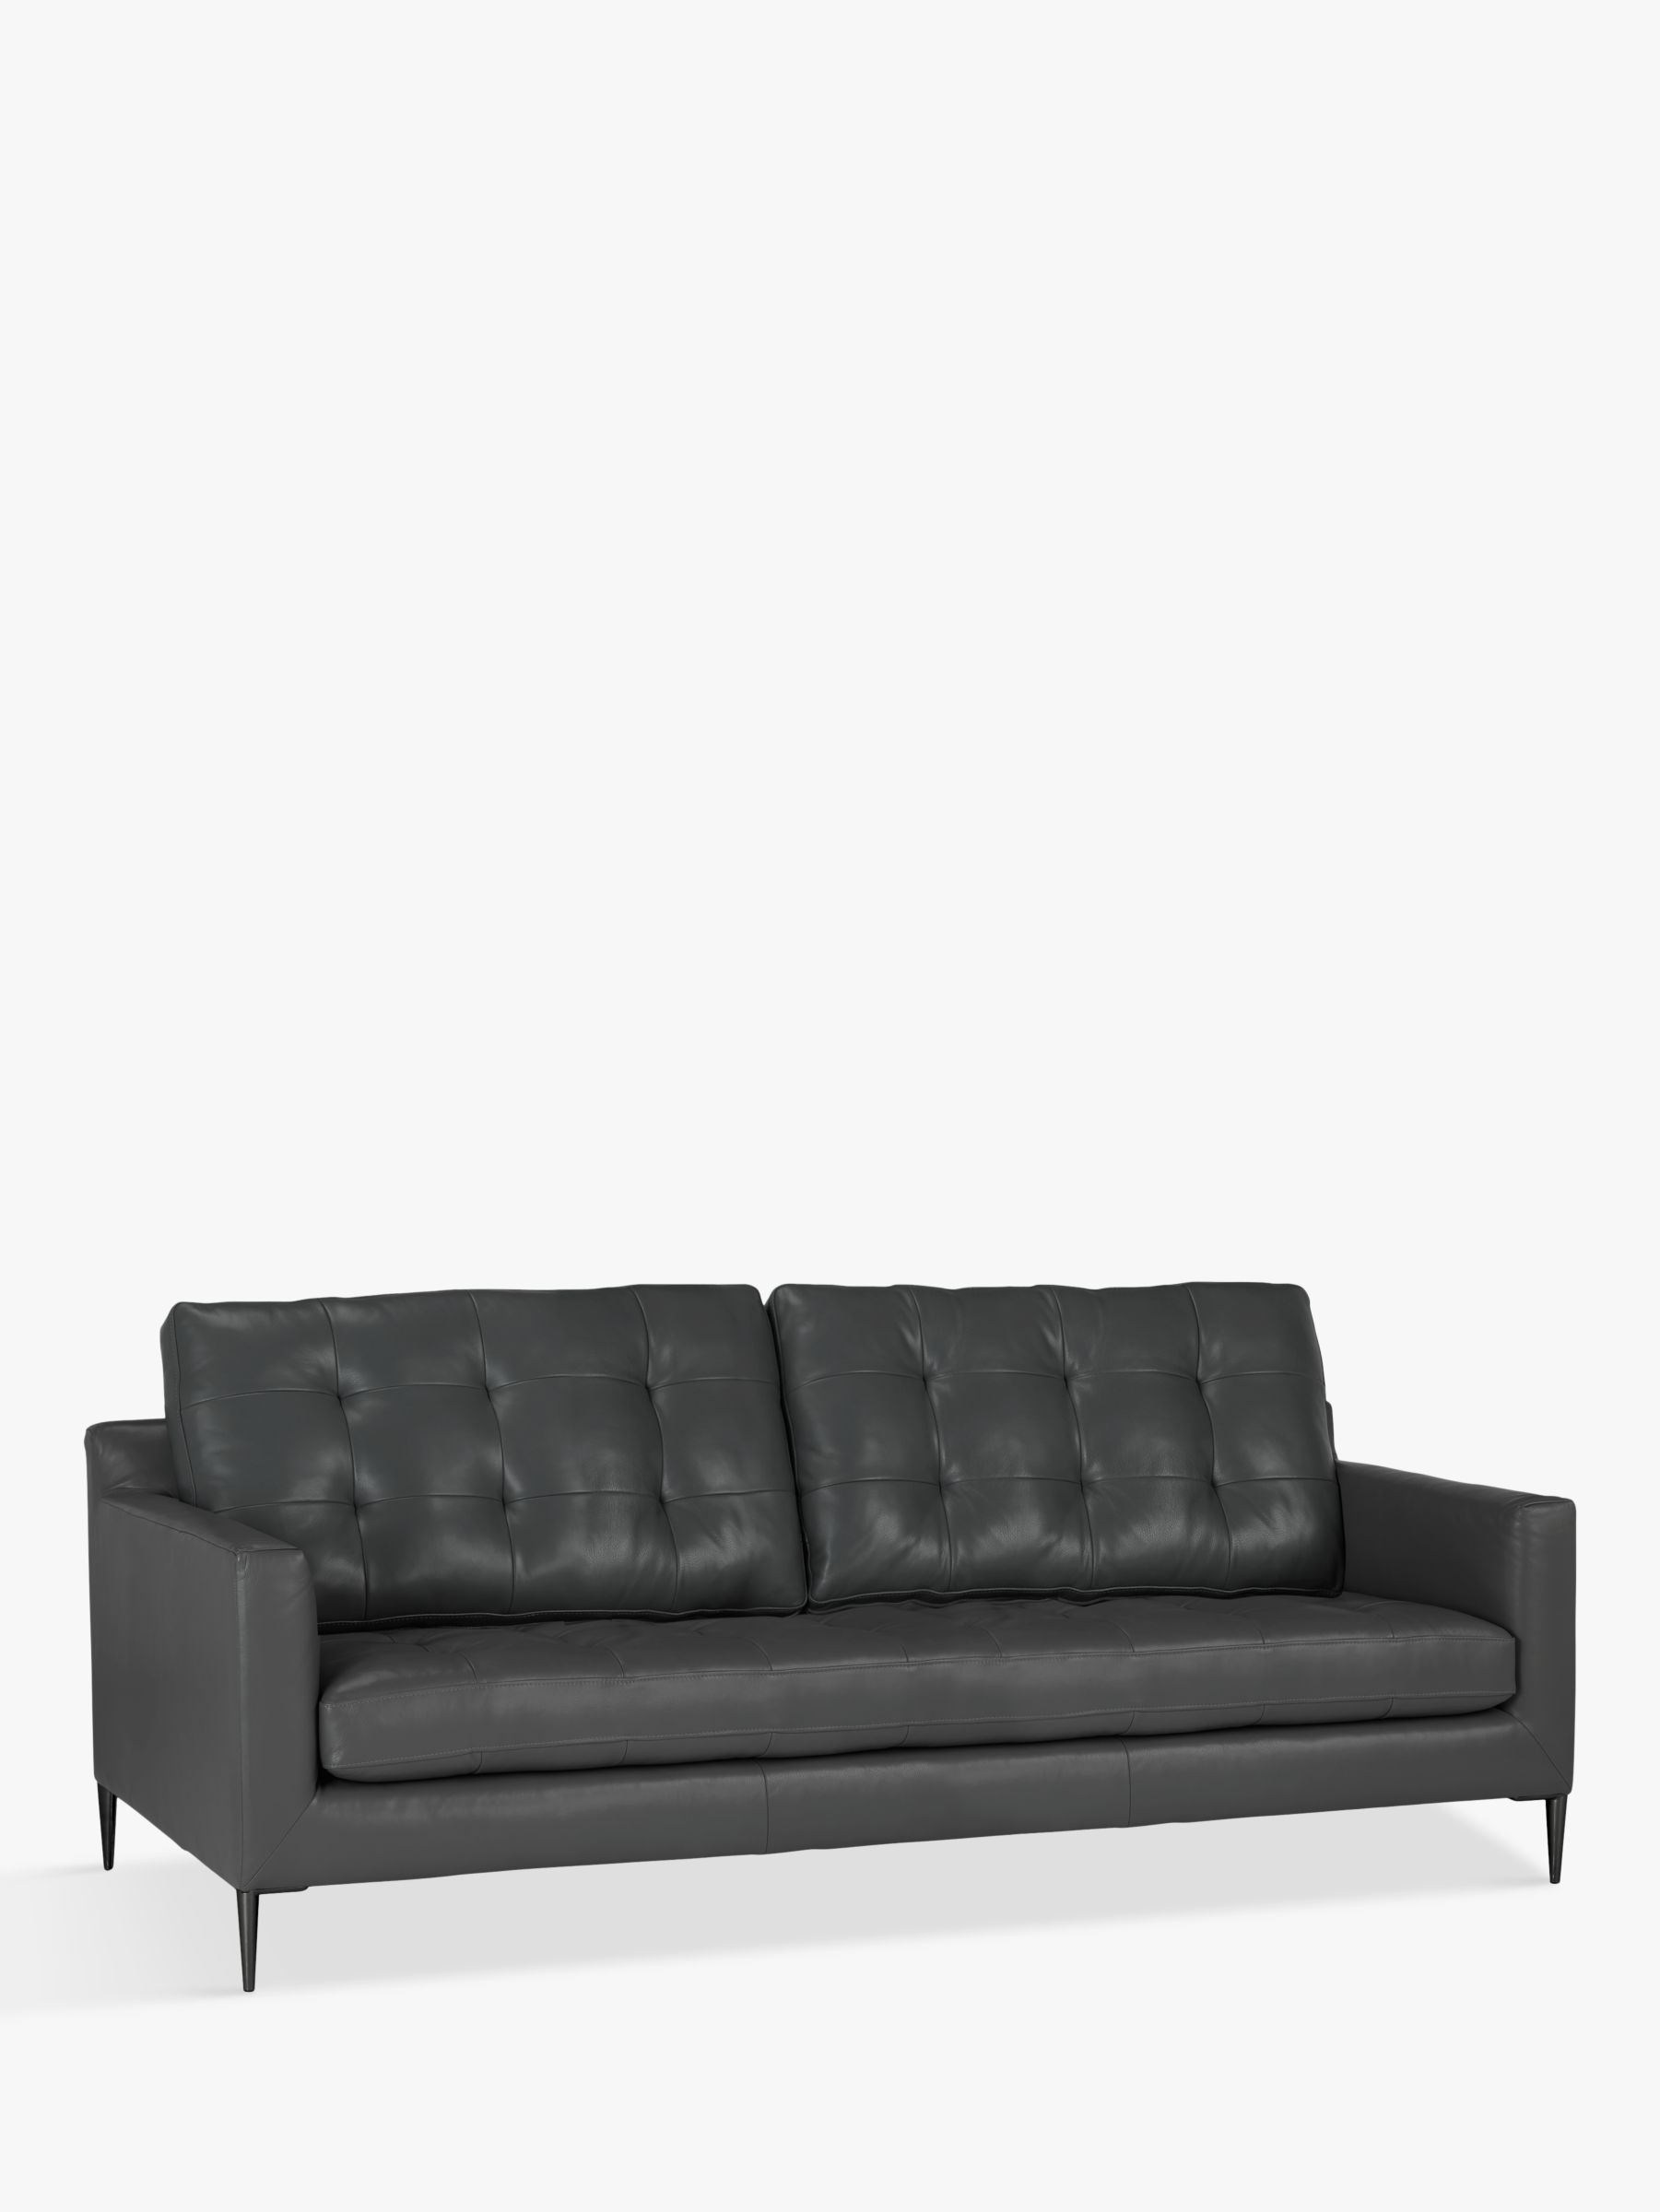 John Lewis Draper Large 3 Seater Leather Sofa, Metal Leg